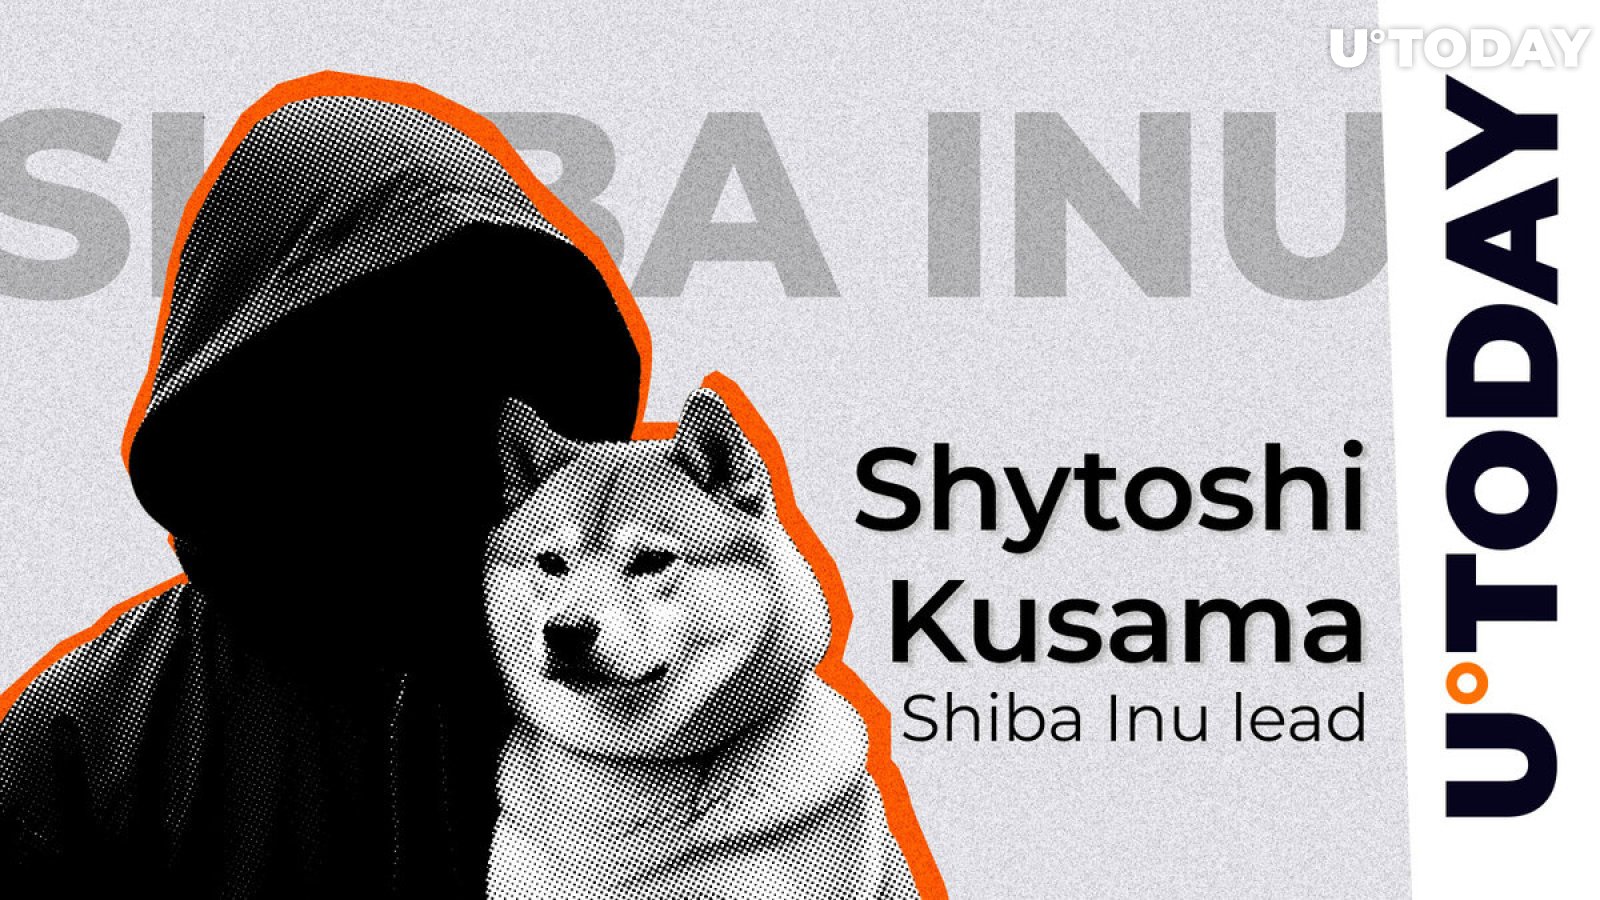 Shytoshi Kusama Excites SHIB Community With “Mask Off” X Message